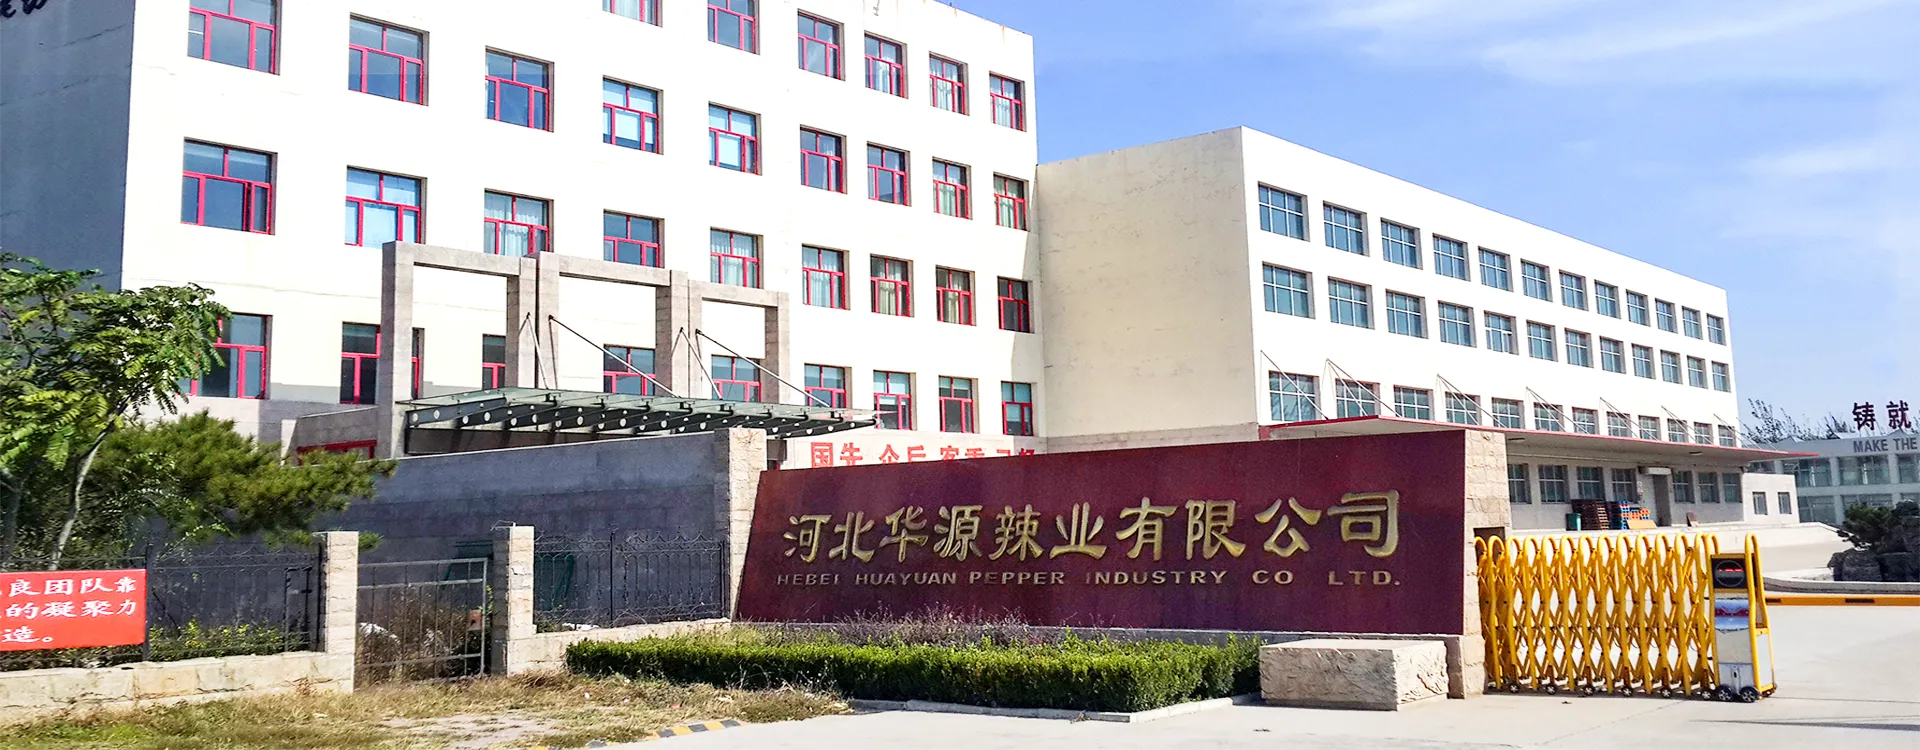 Компания Hebei Huayuan Pepper Industry Co., Ltd.